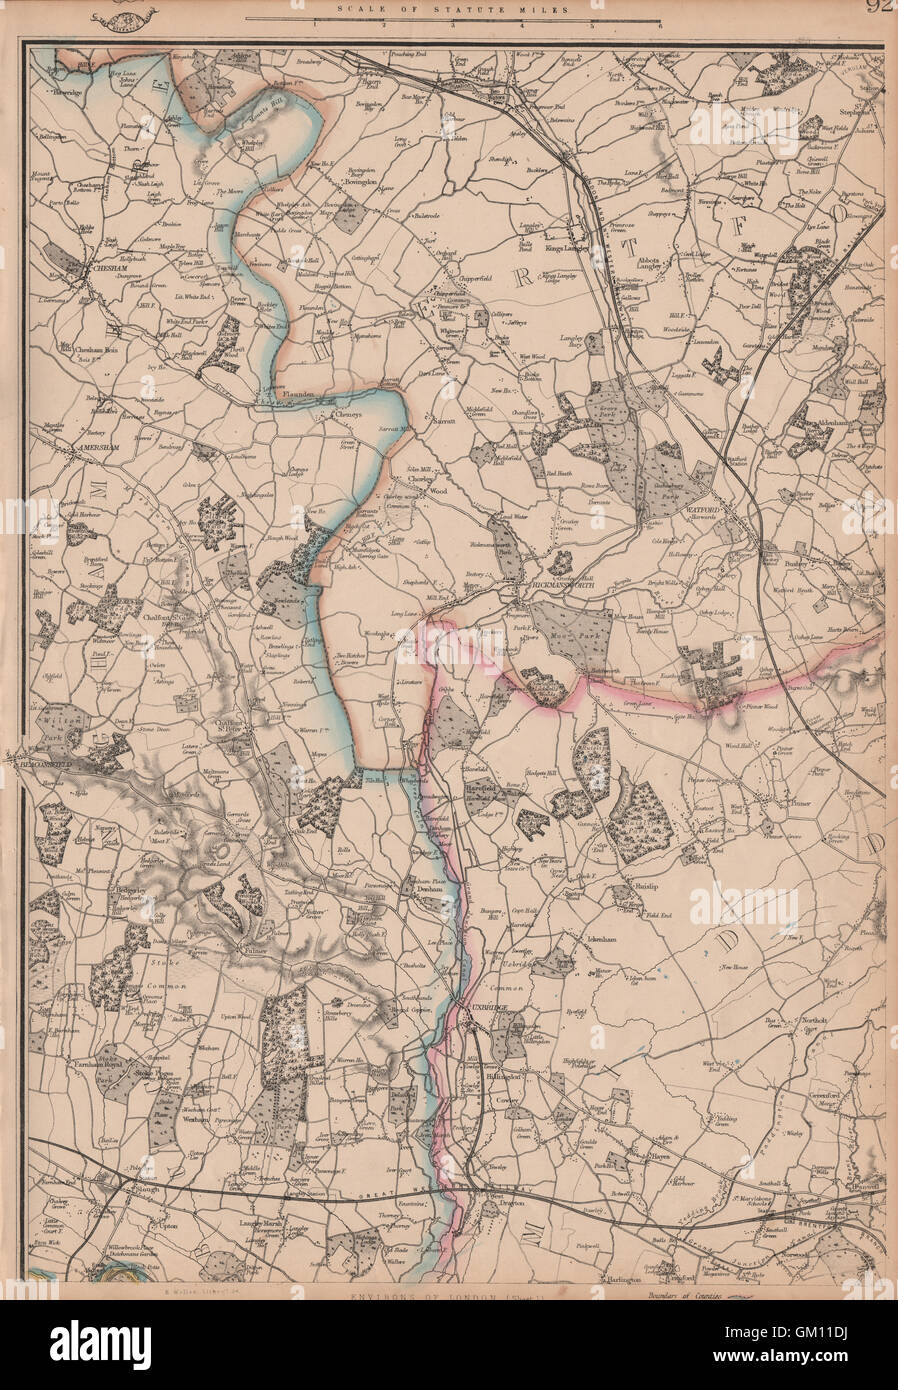 Colne Valley Uxbridge Rickmansworth Watford Amersham Chalfonts Weller 1863 Mapa Gm11dj 